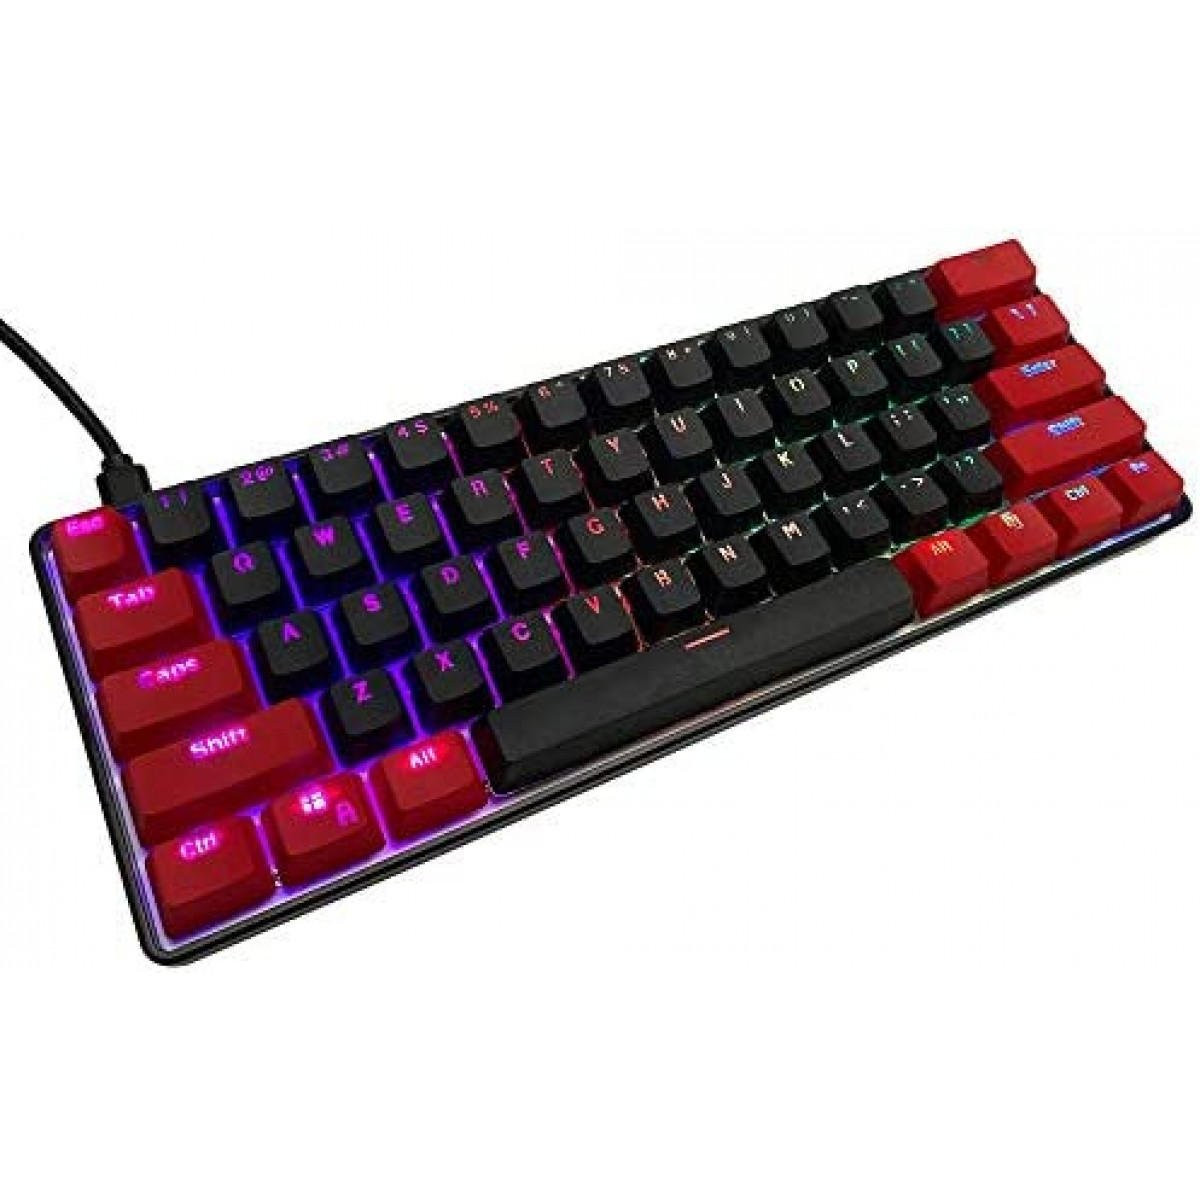 Kraken Pro 60 - BRED Edition 60% Mechanical Keyboard